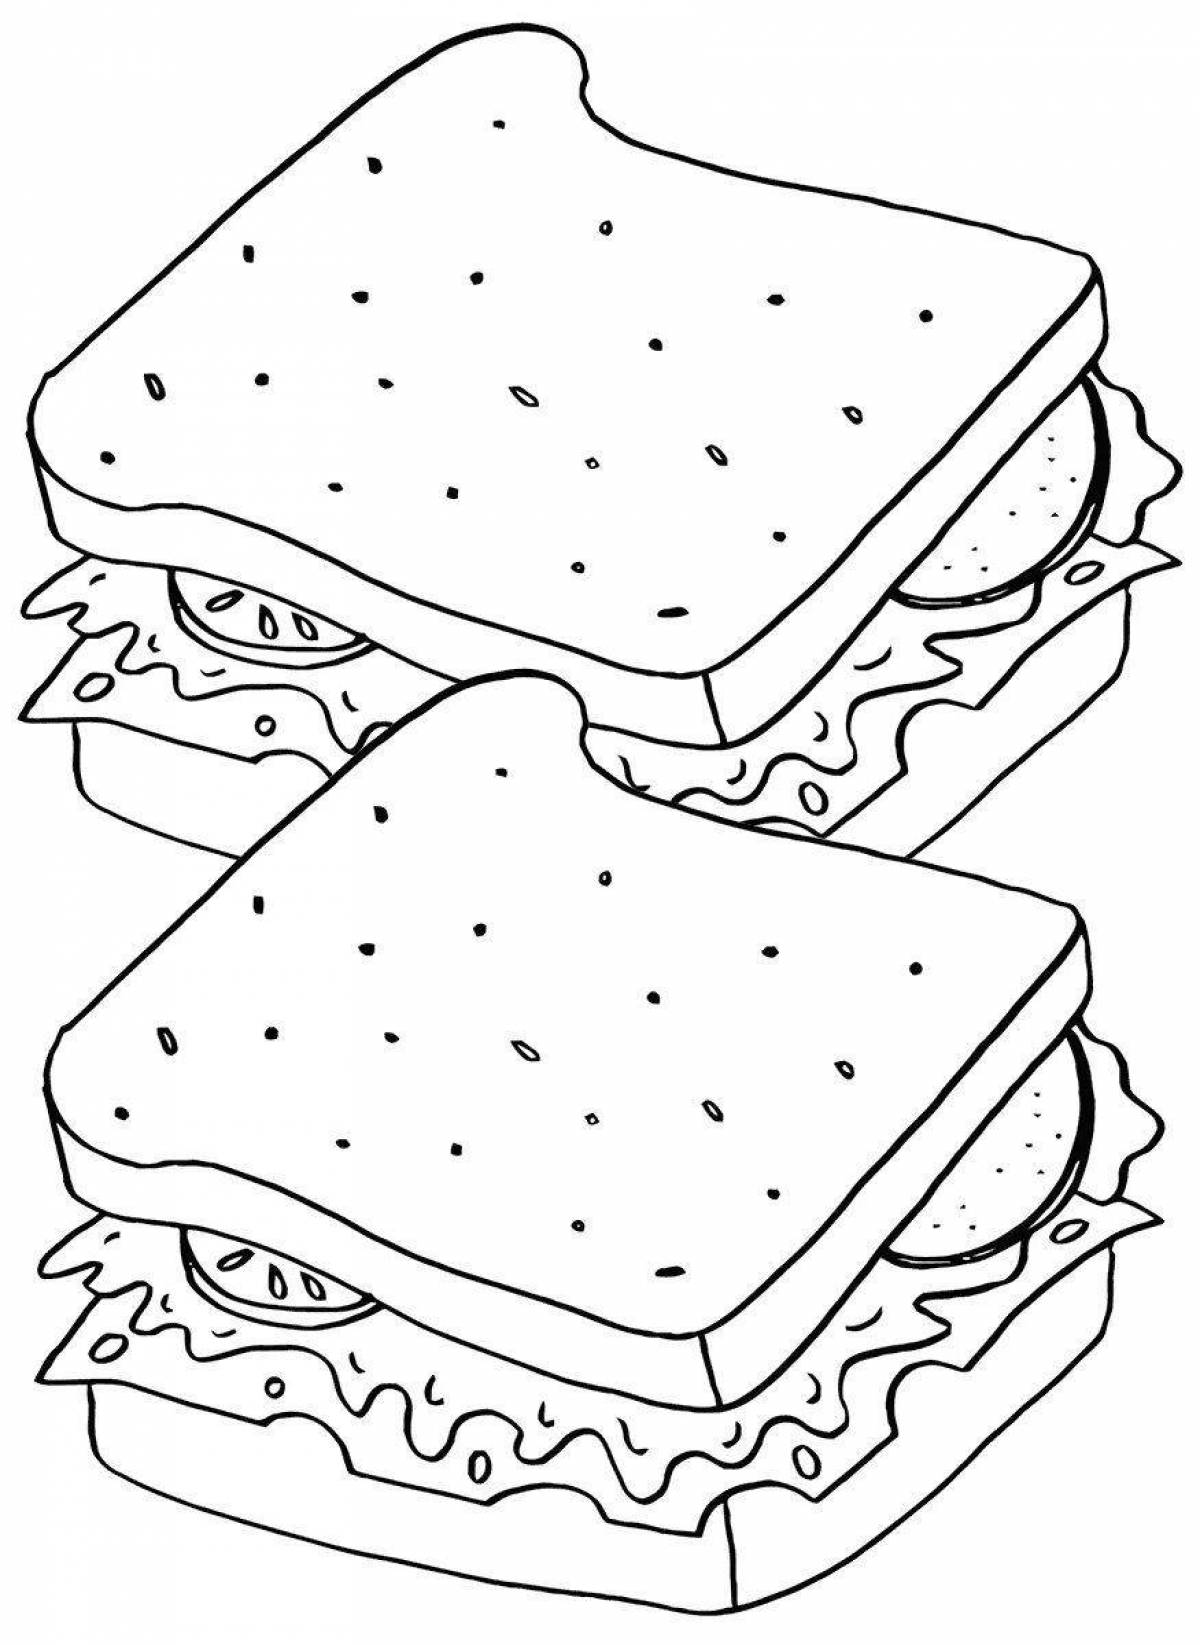 Cream sandwich coloring page